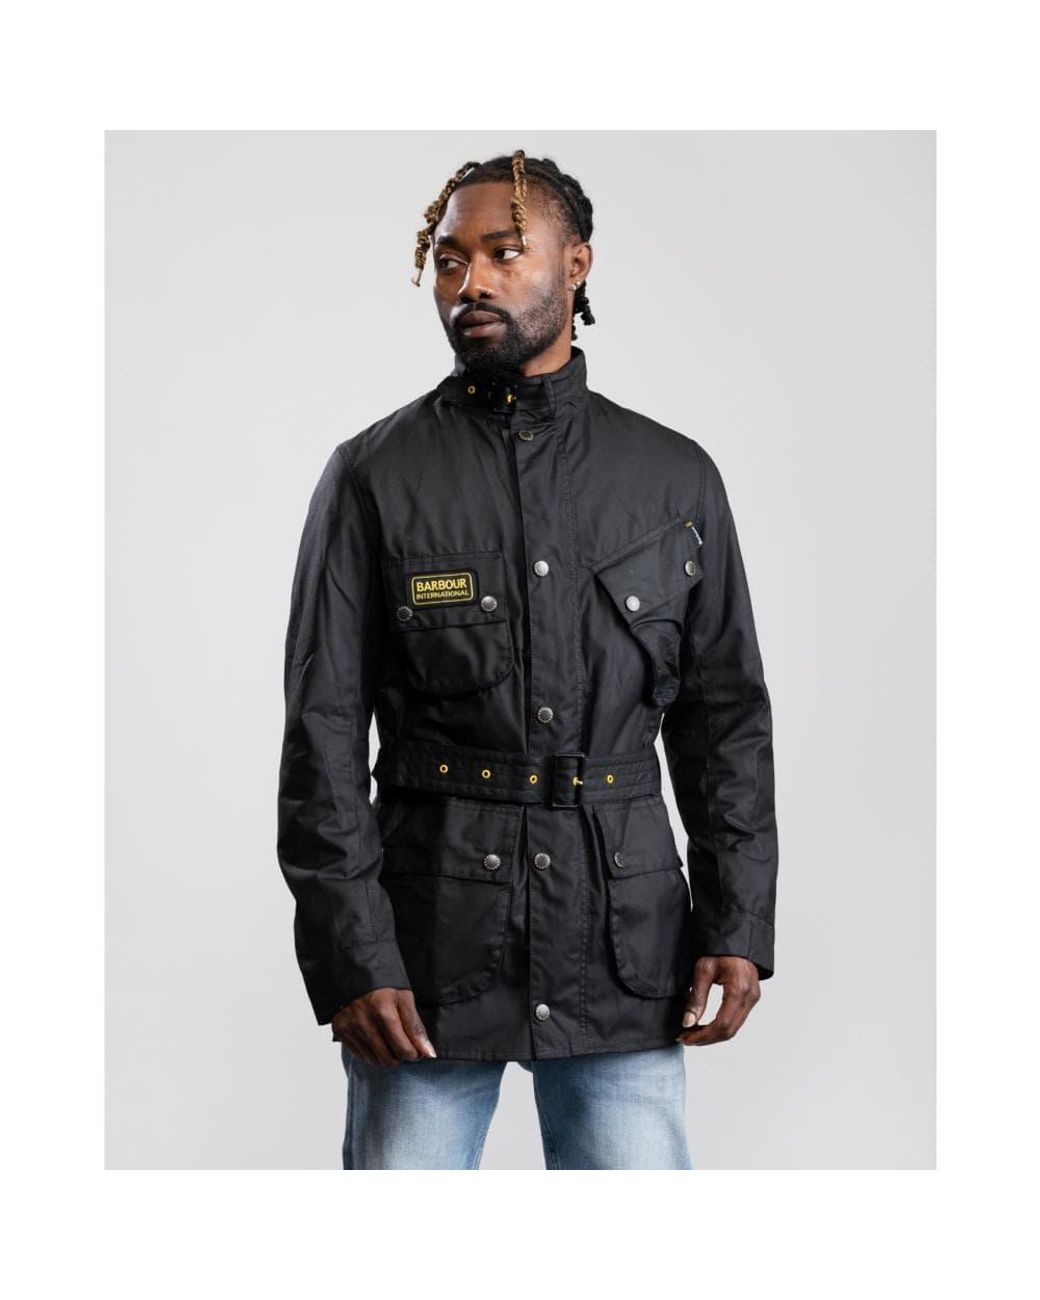 Barbour Cotton Slim International Wax Jacket in Black/Black (Black) for Men  - Save 57% | Lyst